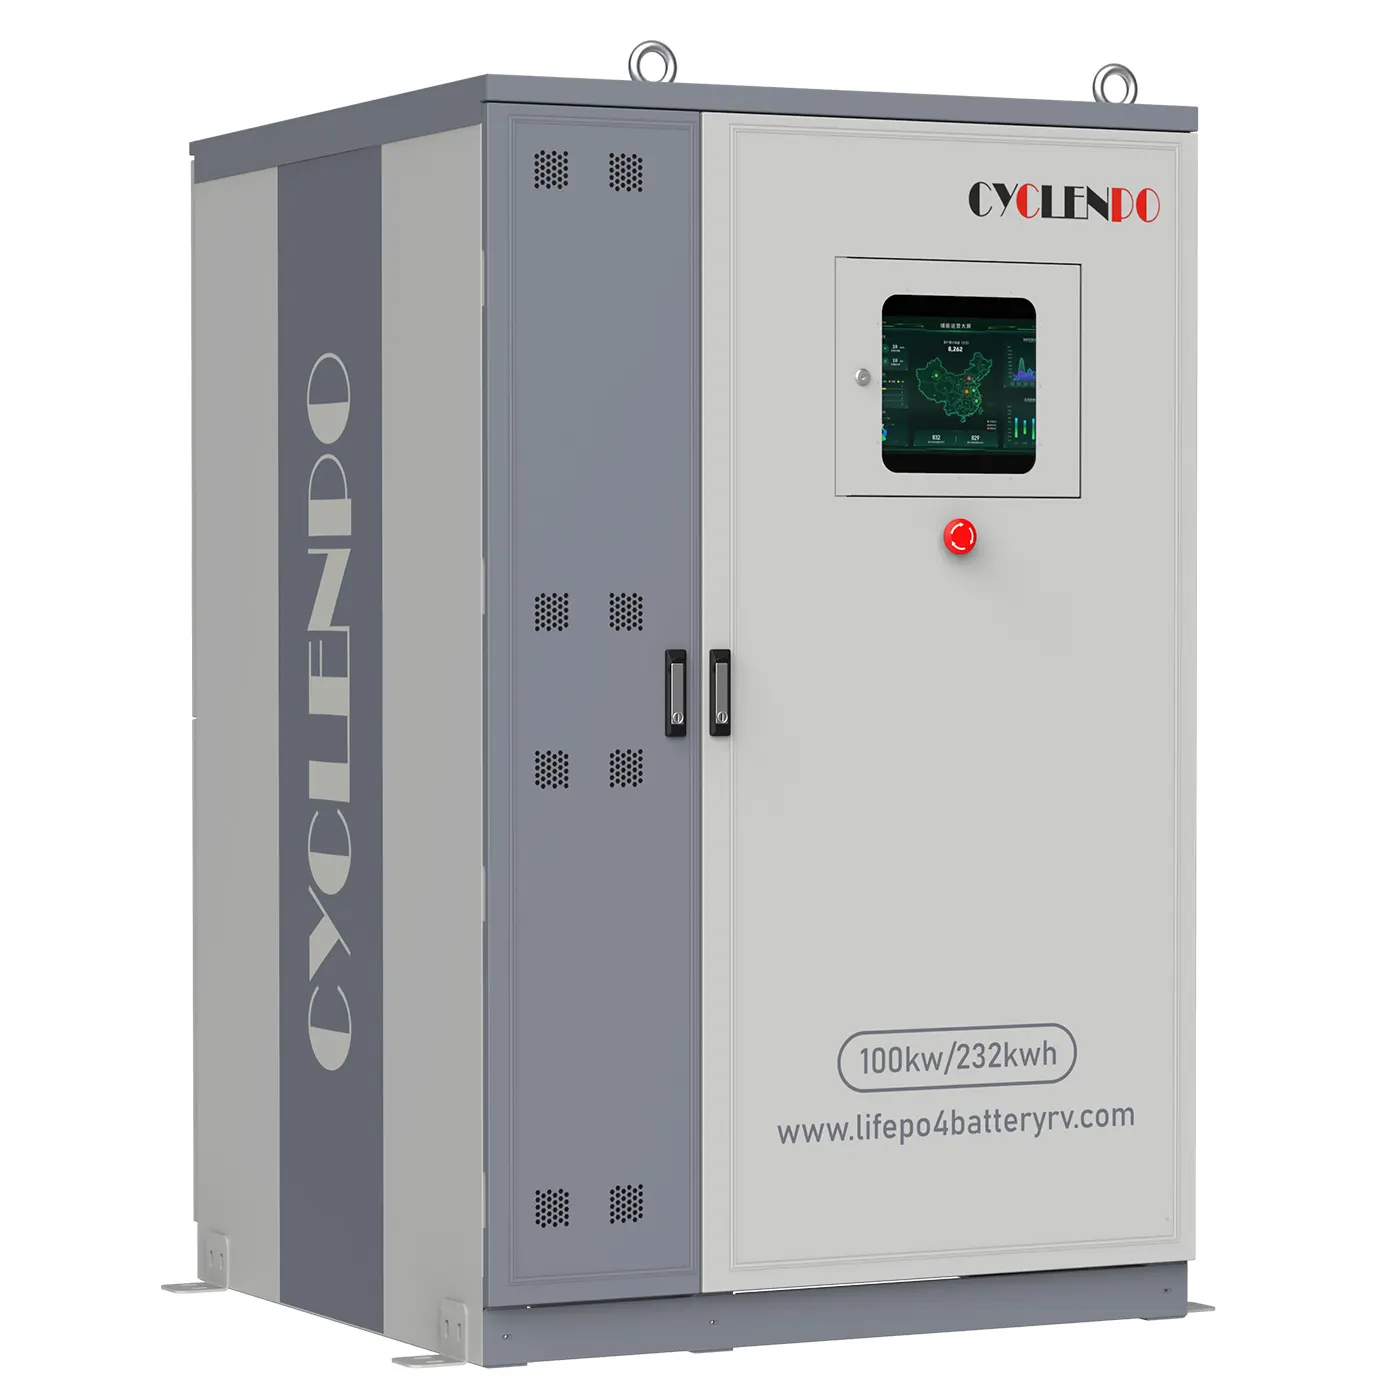 Cyclenpo 100 kwh 232 kwh hochspannungs-lithiumbatterie kommerzielles industrielles energiespeichersystem